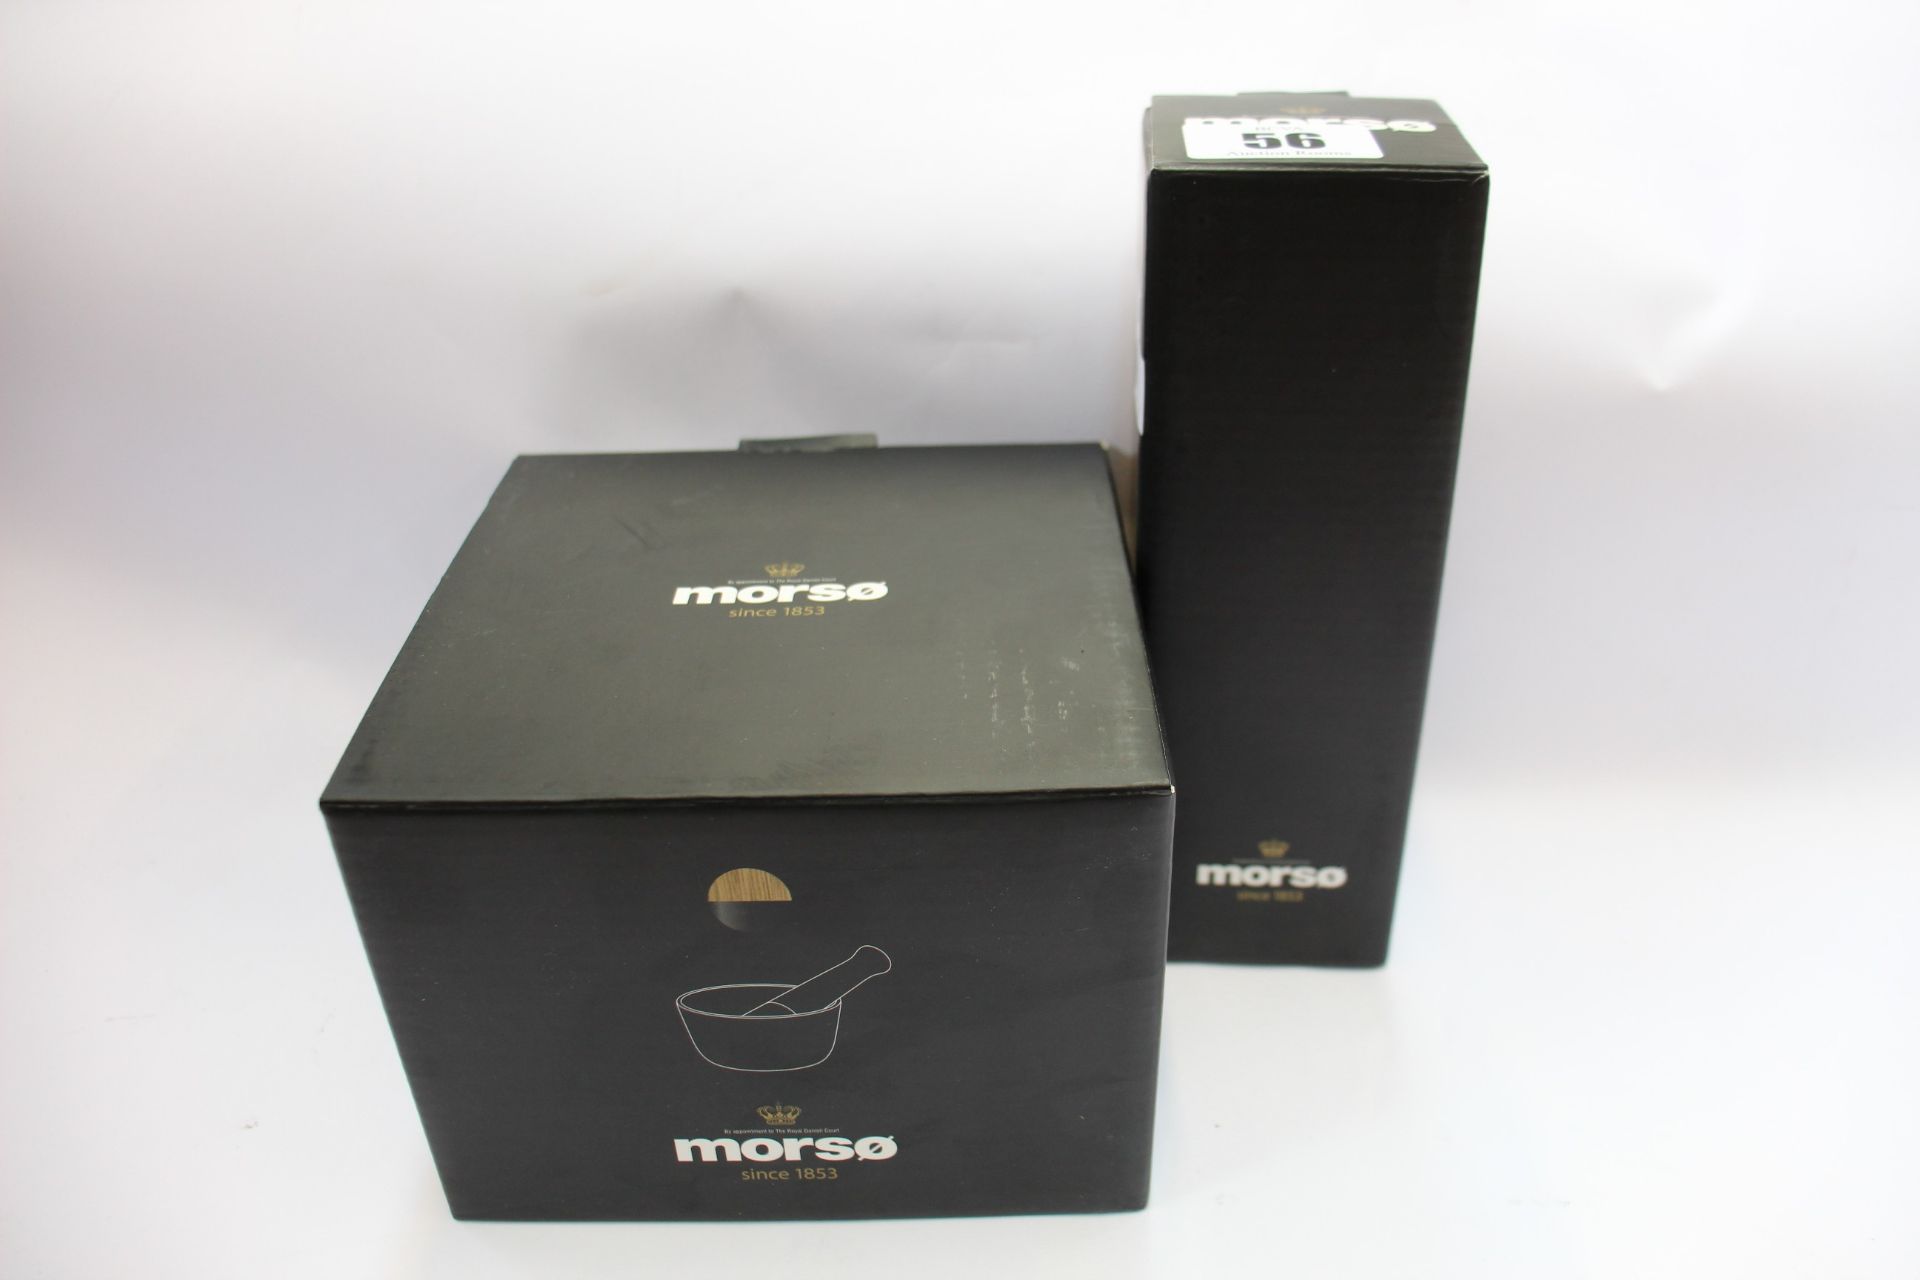 A boxed as new Morso Kit Mortar in oak/cast iron and a boxed as new Morso Kit pepper grinder in